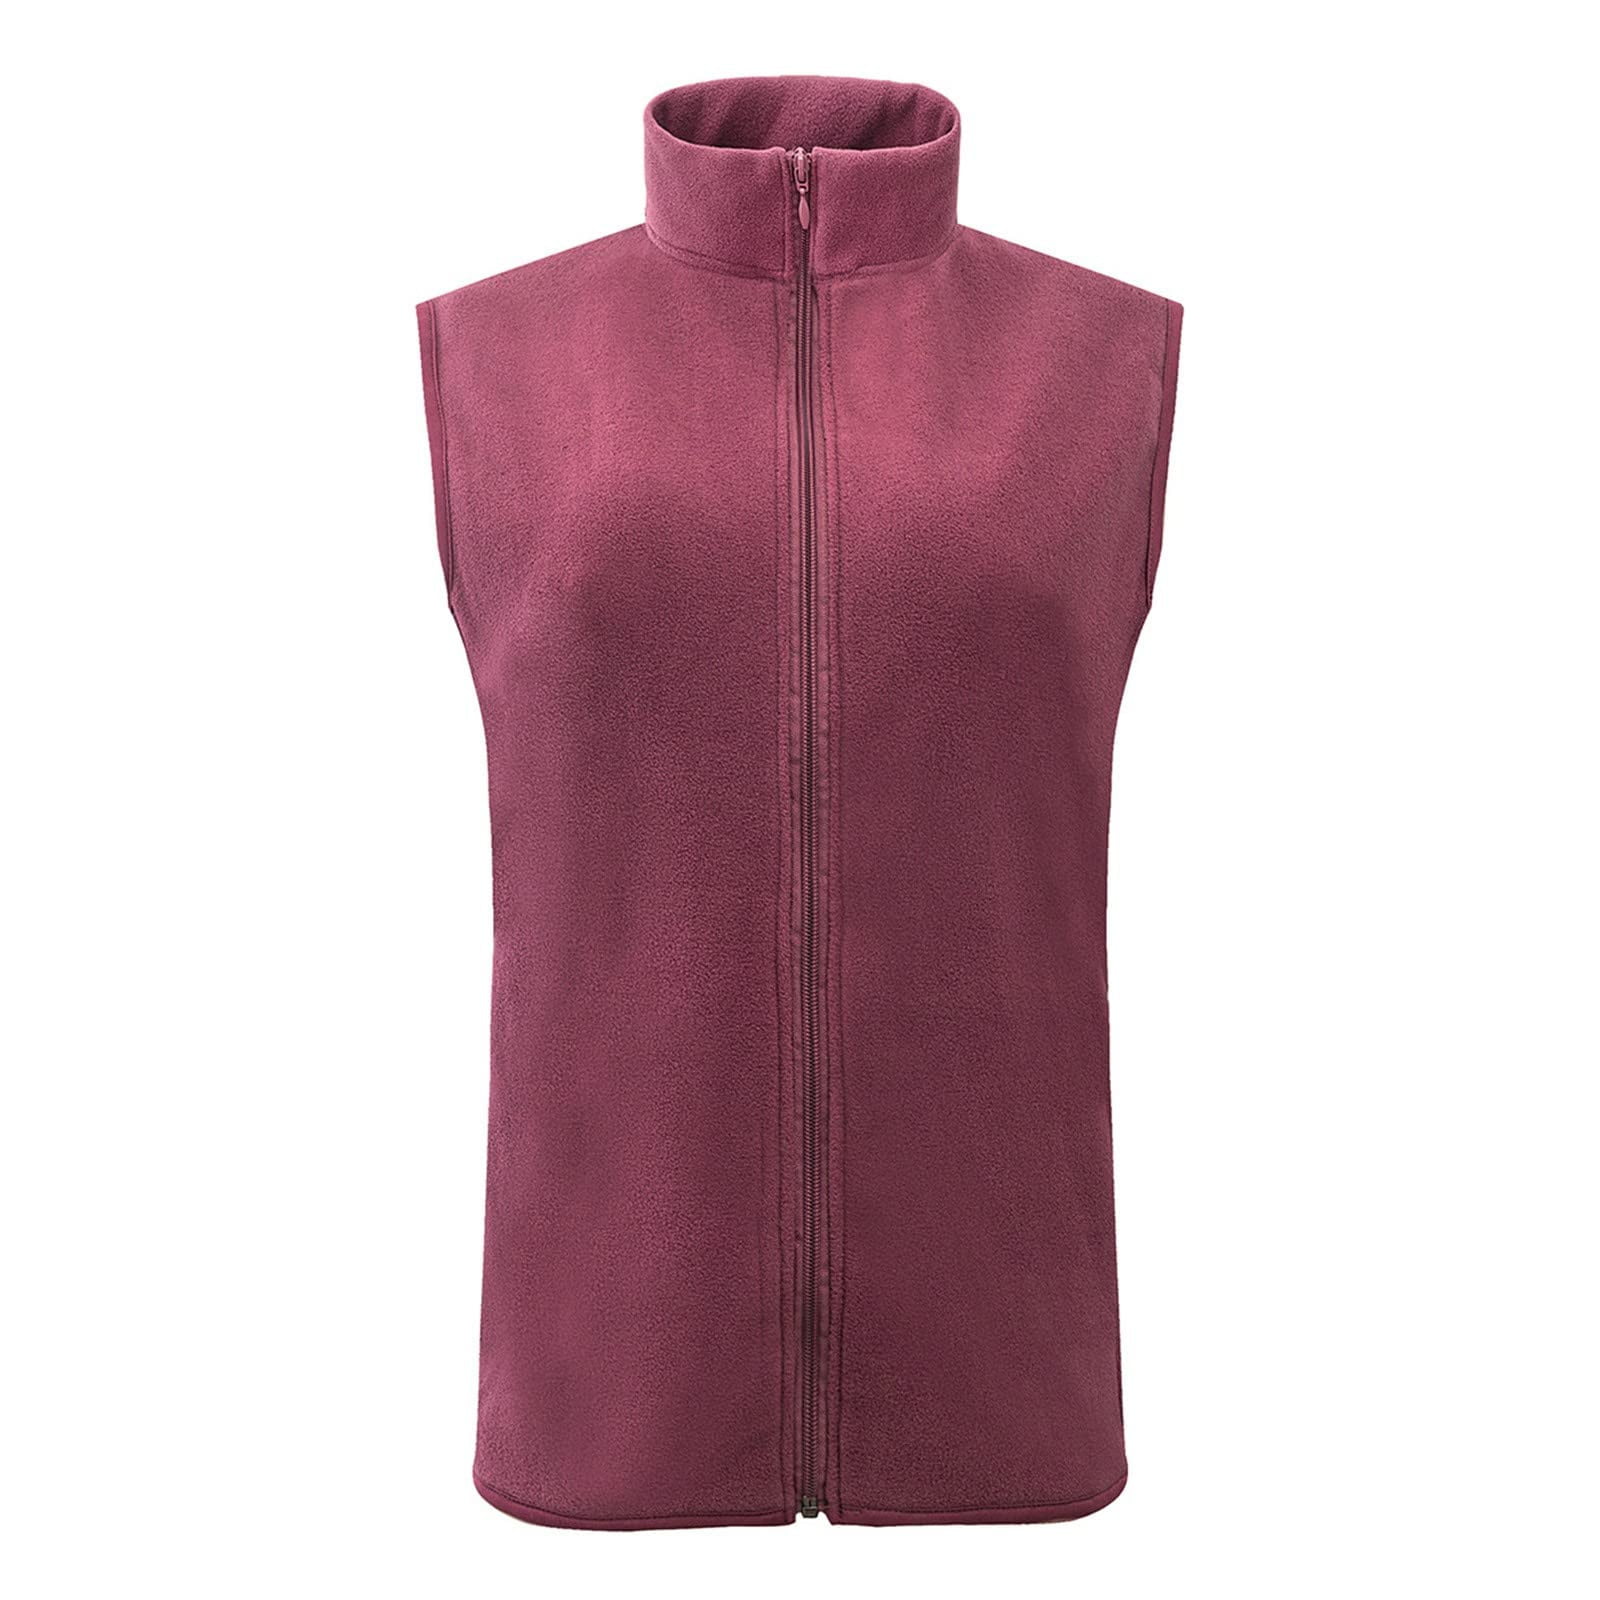 XFLWAM Women's Fuzzy Fleece Vest Classic-Fit Warm Sleeveless Zip